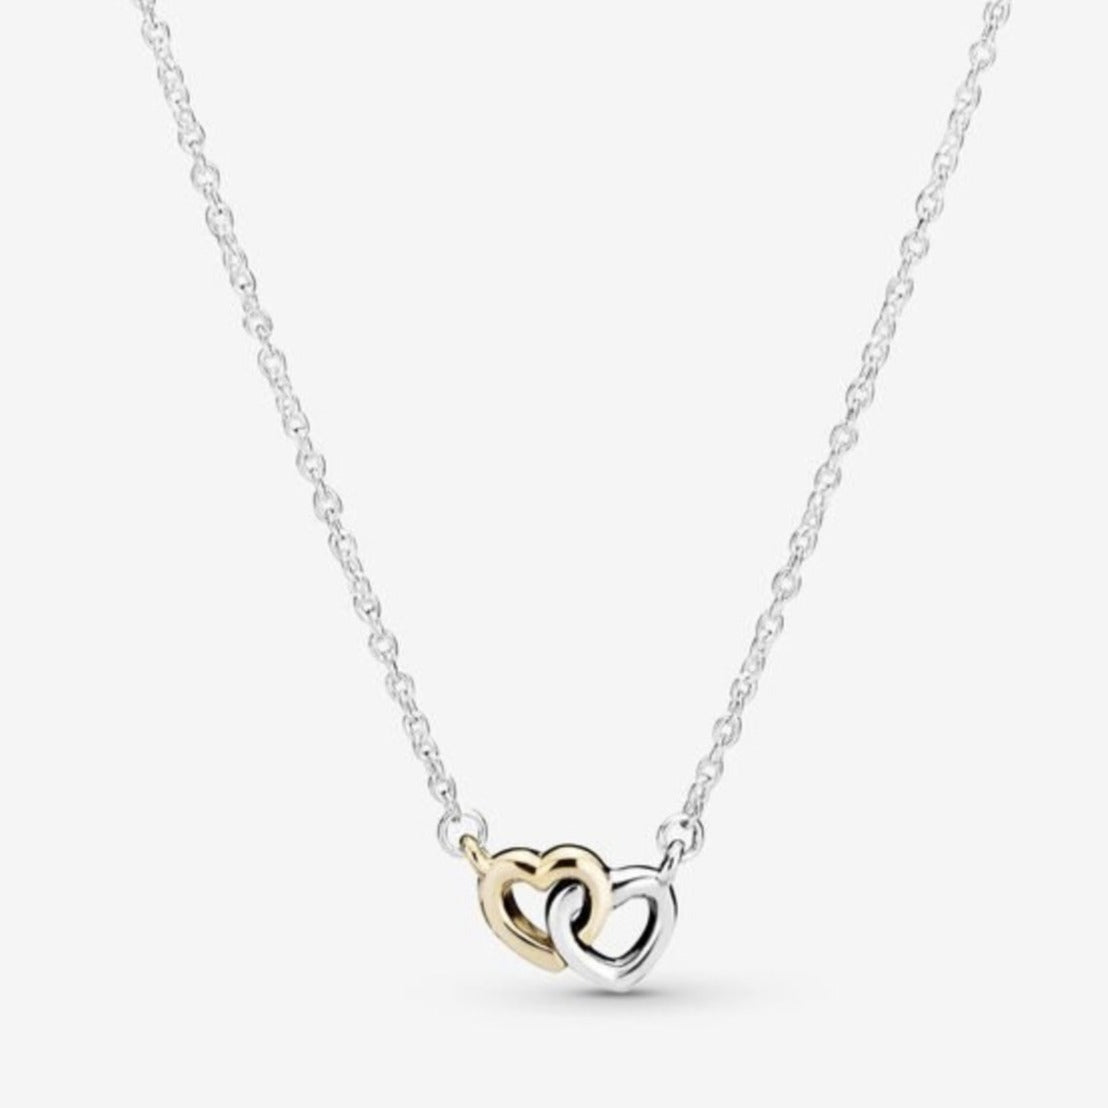 Pandora Heart to Heart Necklace Sterling Silver & CZ | eBay